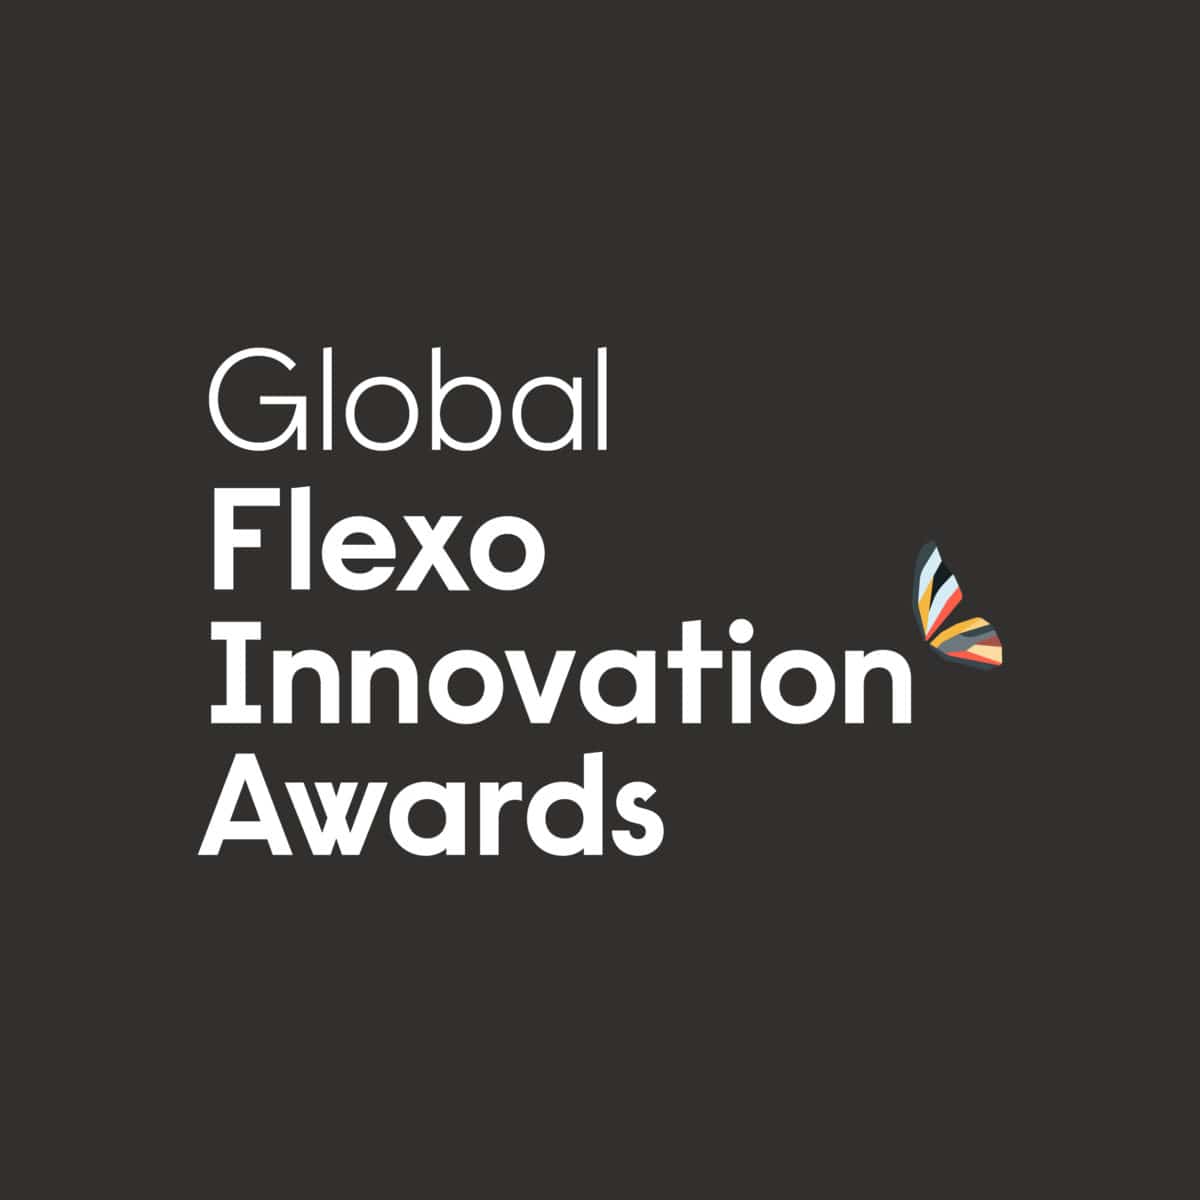 Flexo innovation awards